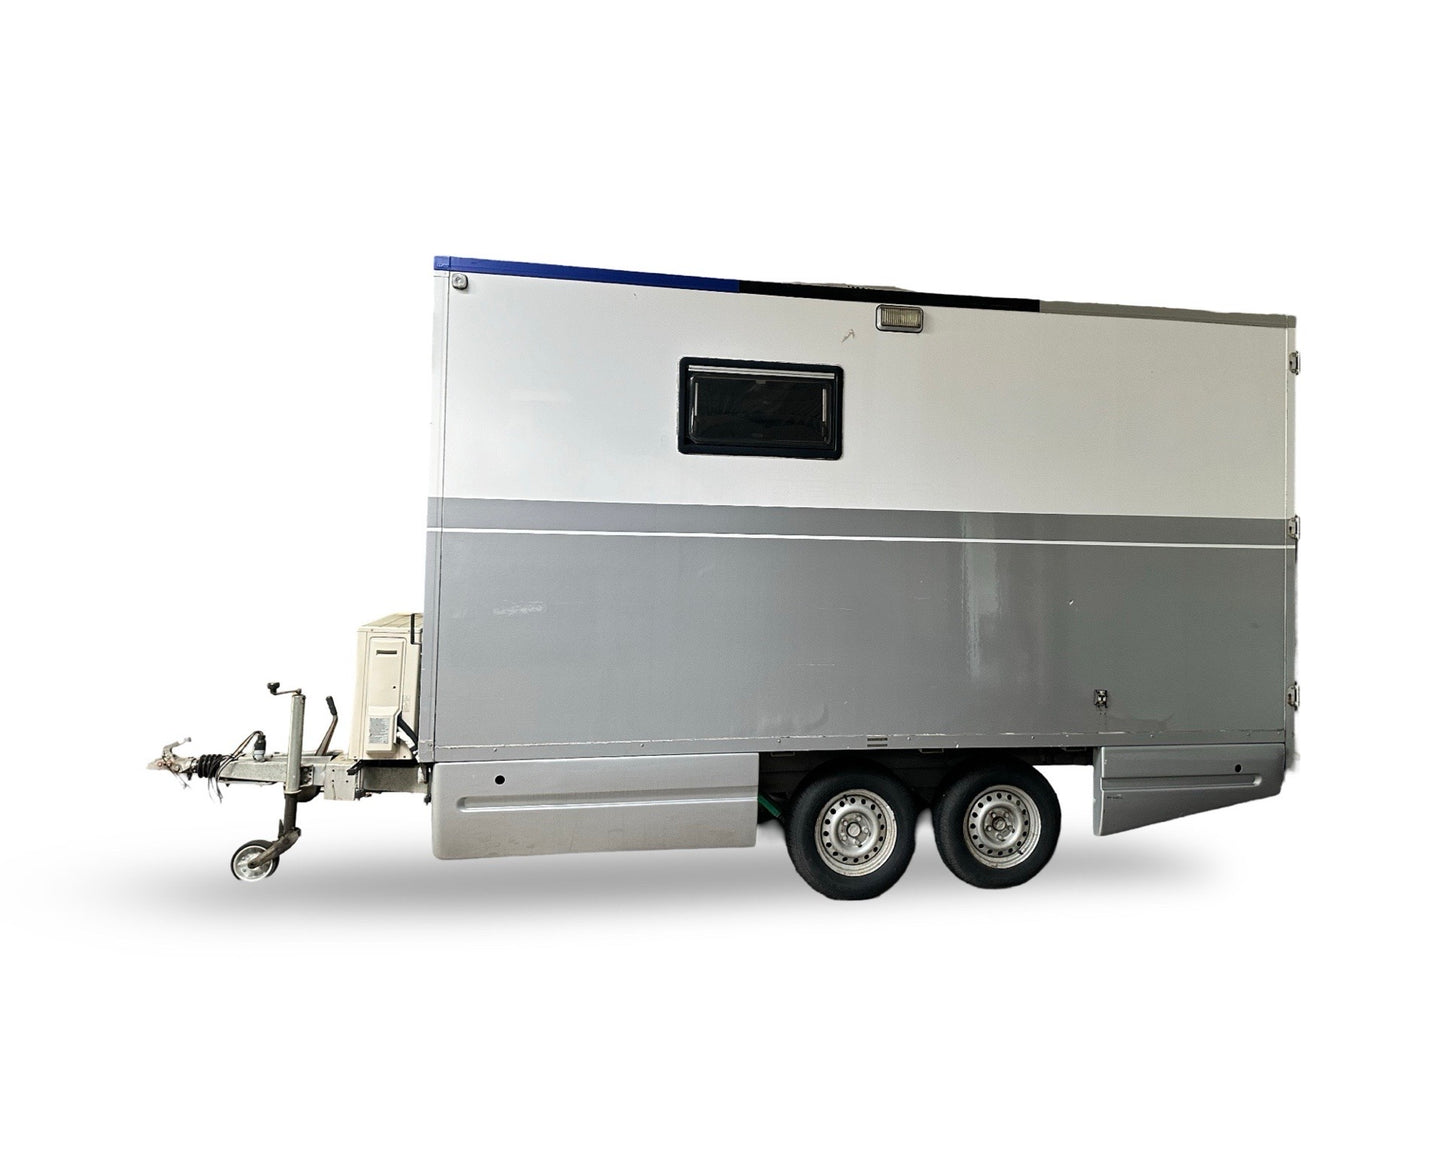 OB Van for 6-8 Camera production incl. trailer